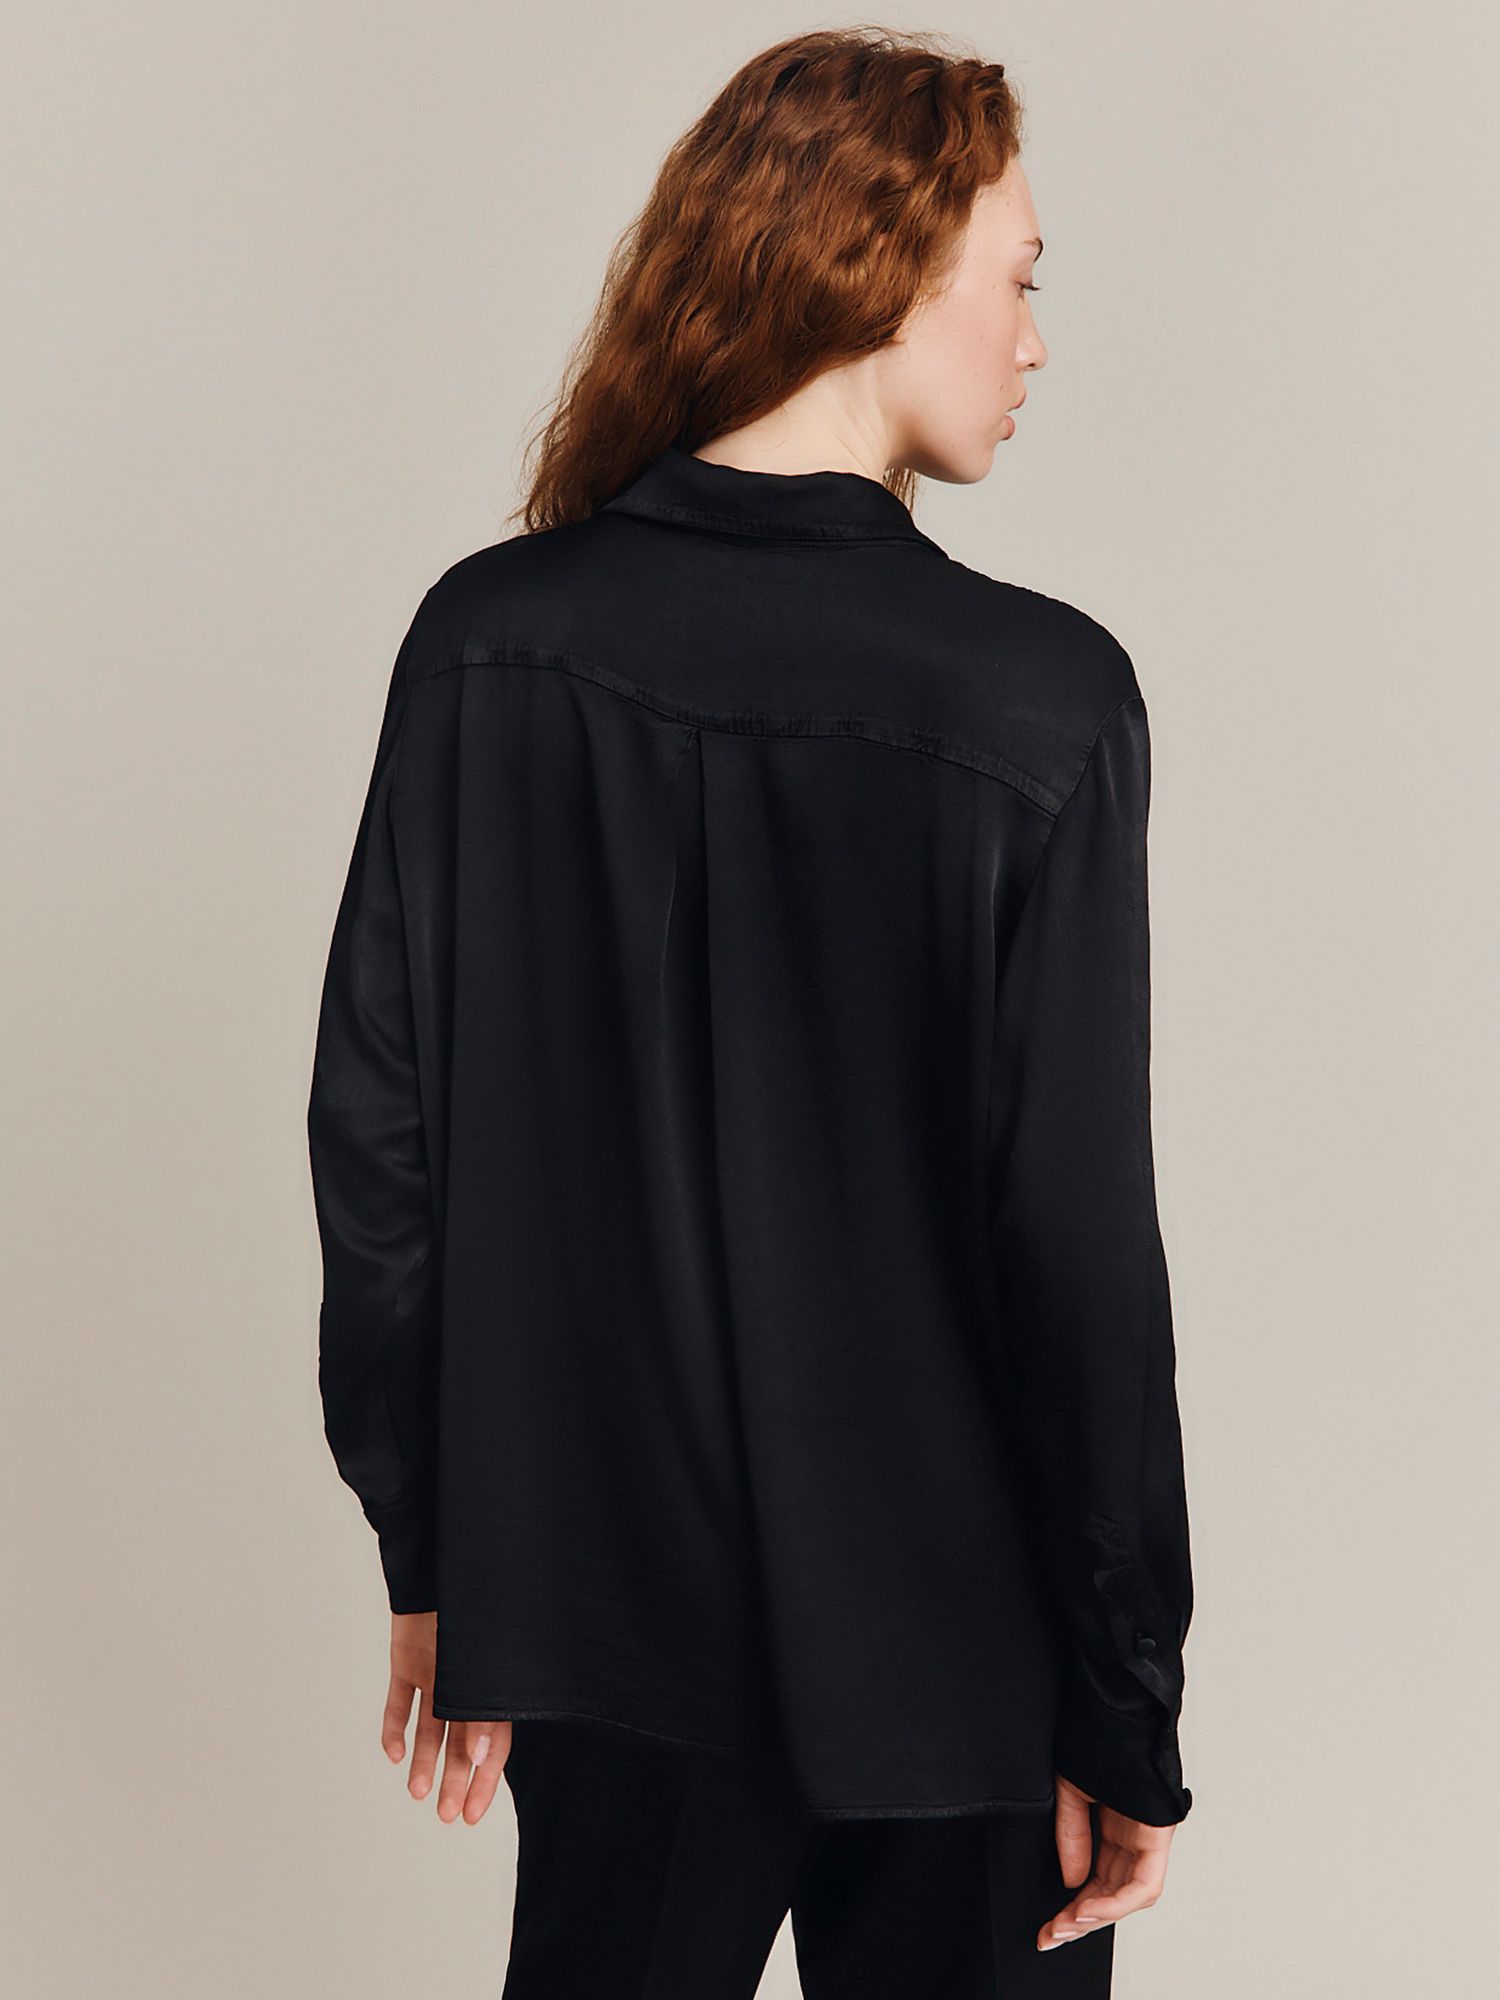 Ghost Ellie Satin Shirt, Black at John Lewis & Partners